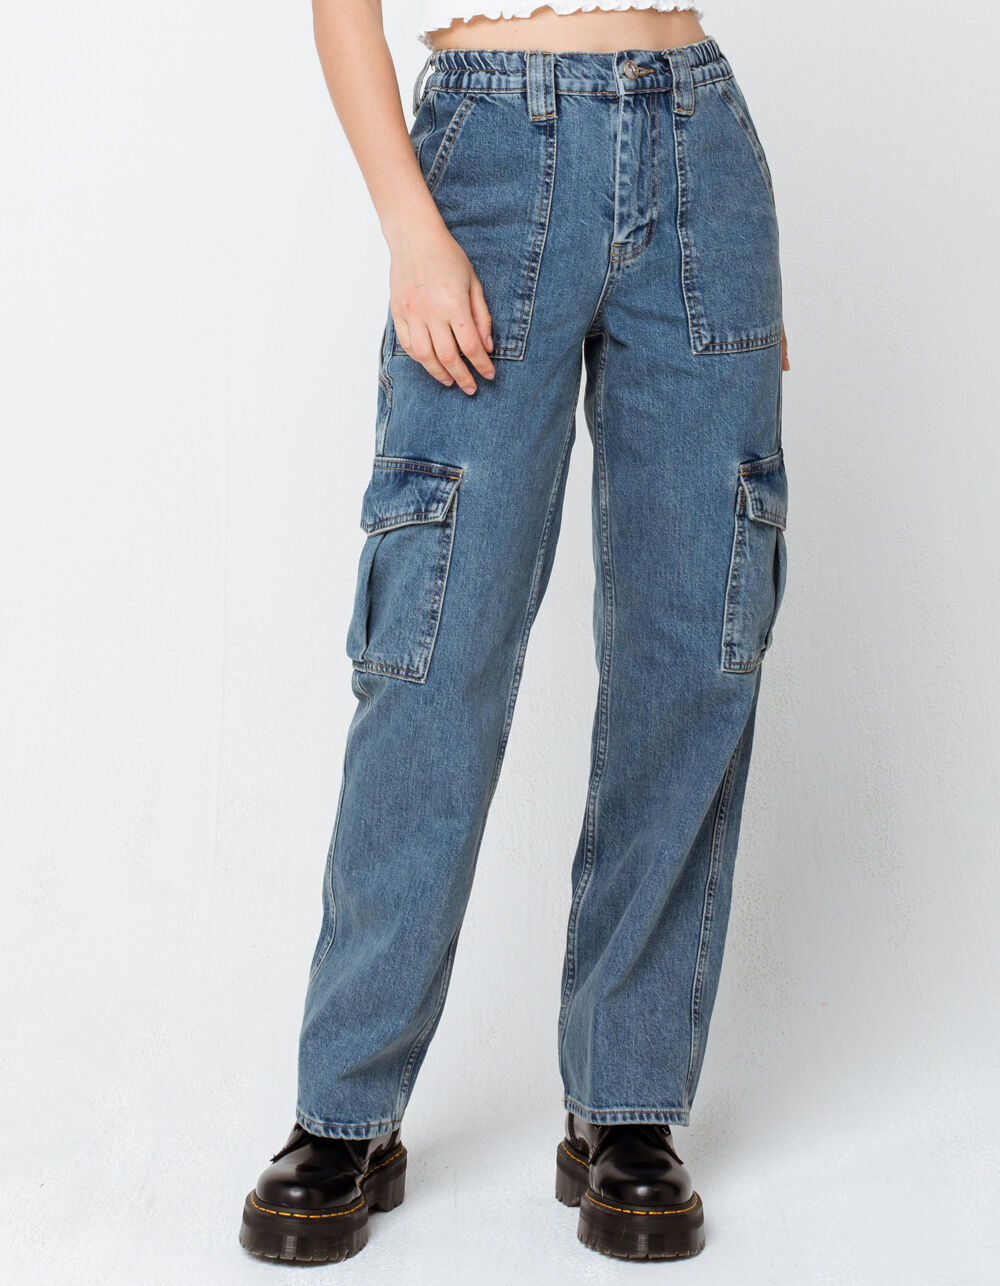 Outfitters Elastic Skate Womens Jeans - VINTAGE MEDIUM |